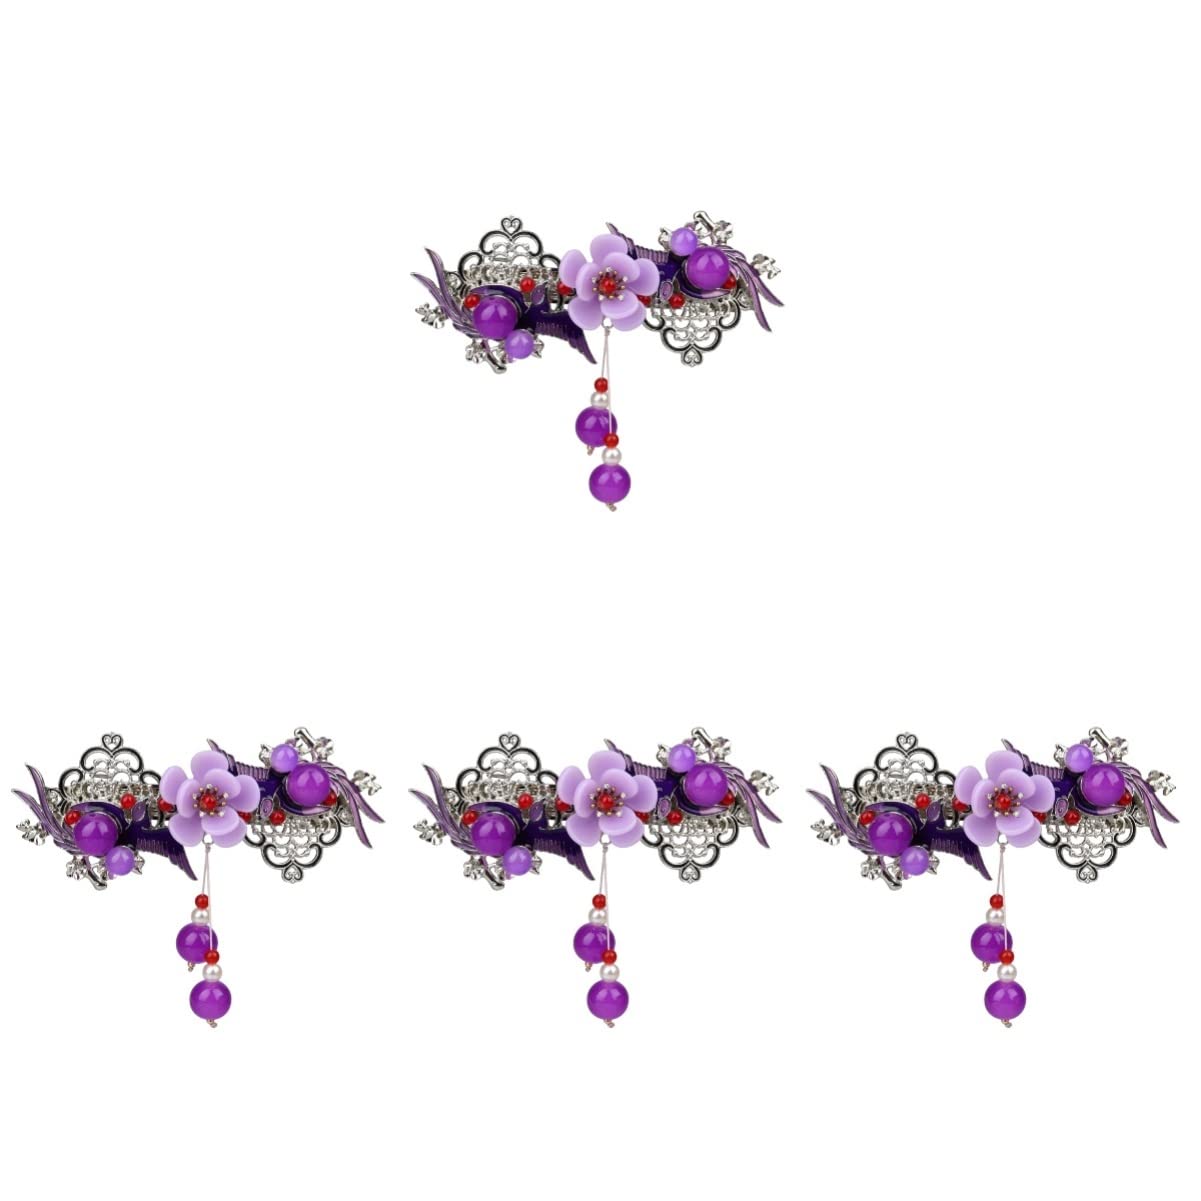 SHUBIAO 6 Stück Vintage Dekorative Blume Blume Haarspangen for Frauen Dekorative Haarspangen Haarschmuck for Frauen Haarspange Quaste Haarspangen (Color : Purplex2pcs, Size : 8.6X3.8X2.5CMx5pcs)